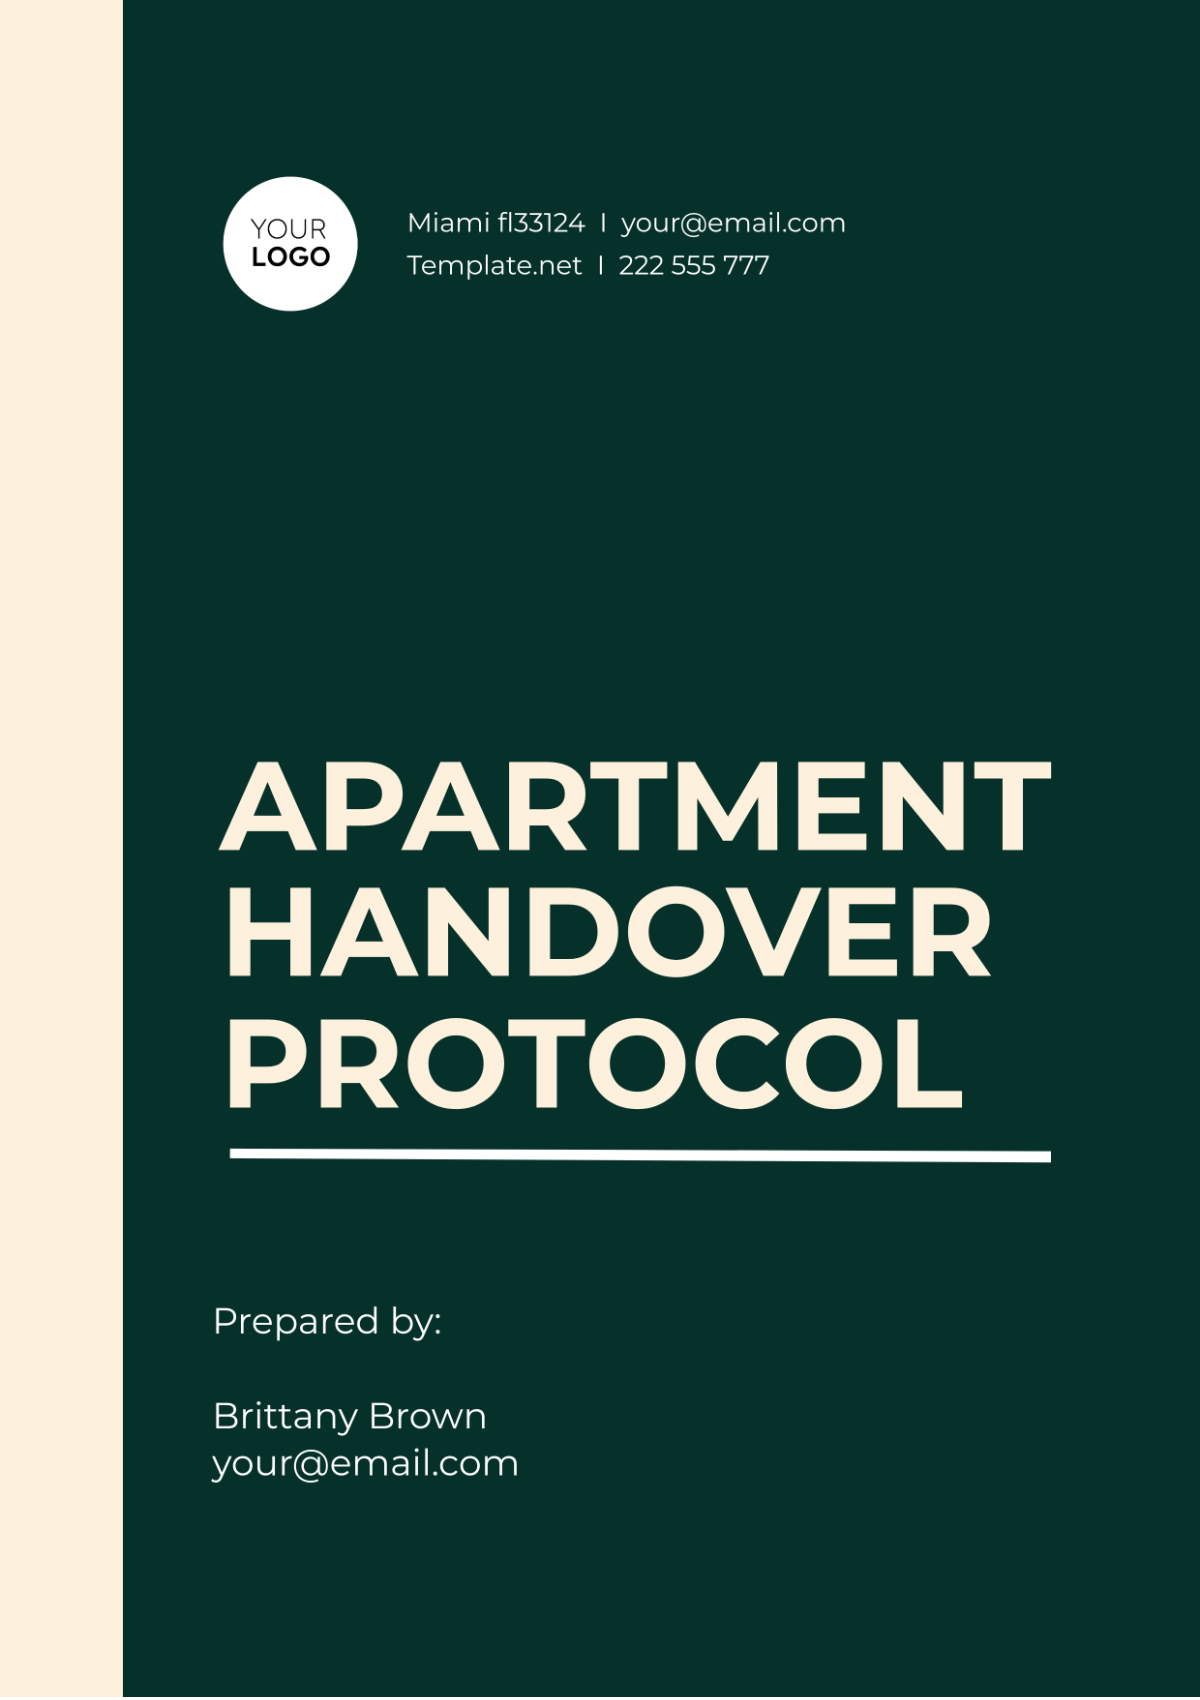 Free Apartment Handover Protocol Template